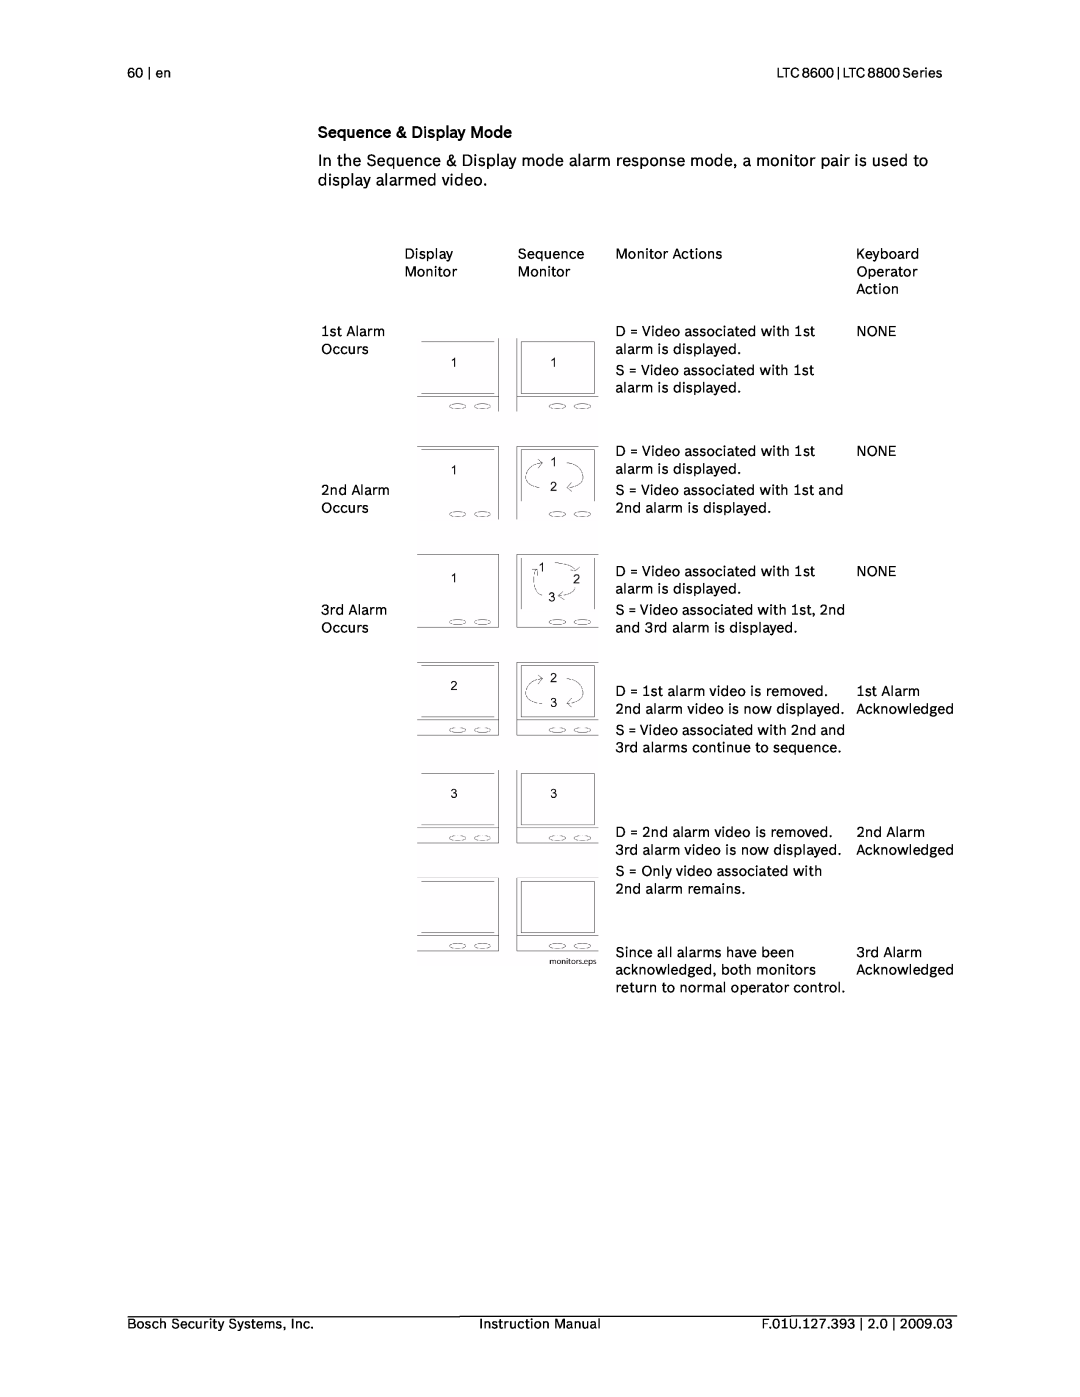 Bosch Appliances LTC 8600, LTC 8800 instruction manual Sequence & Display Mode 